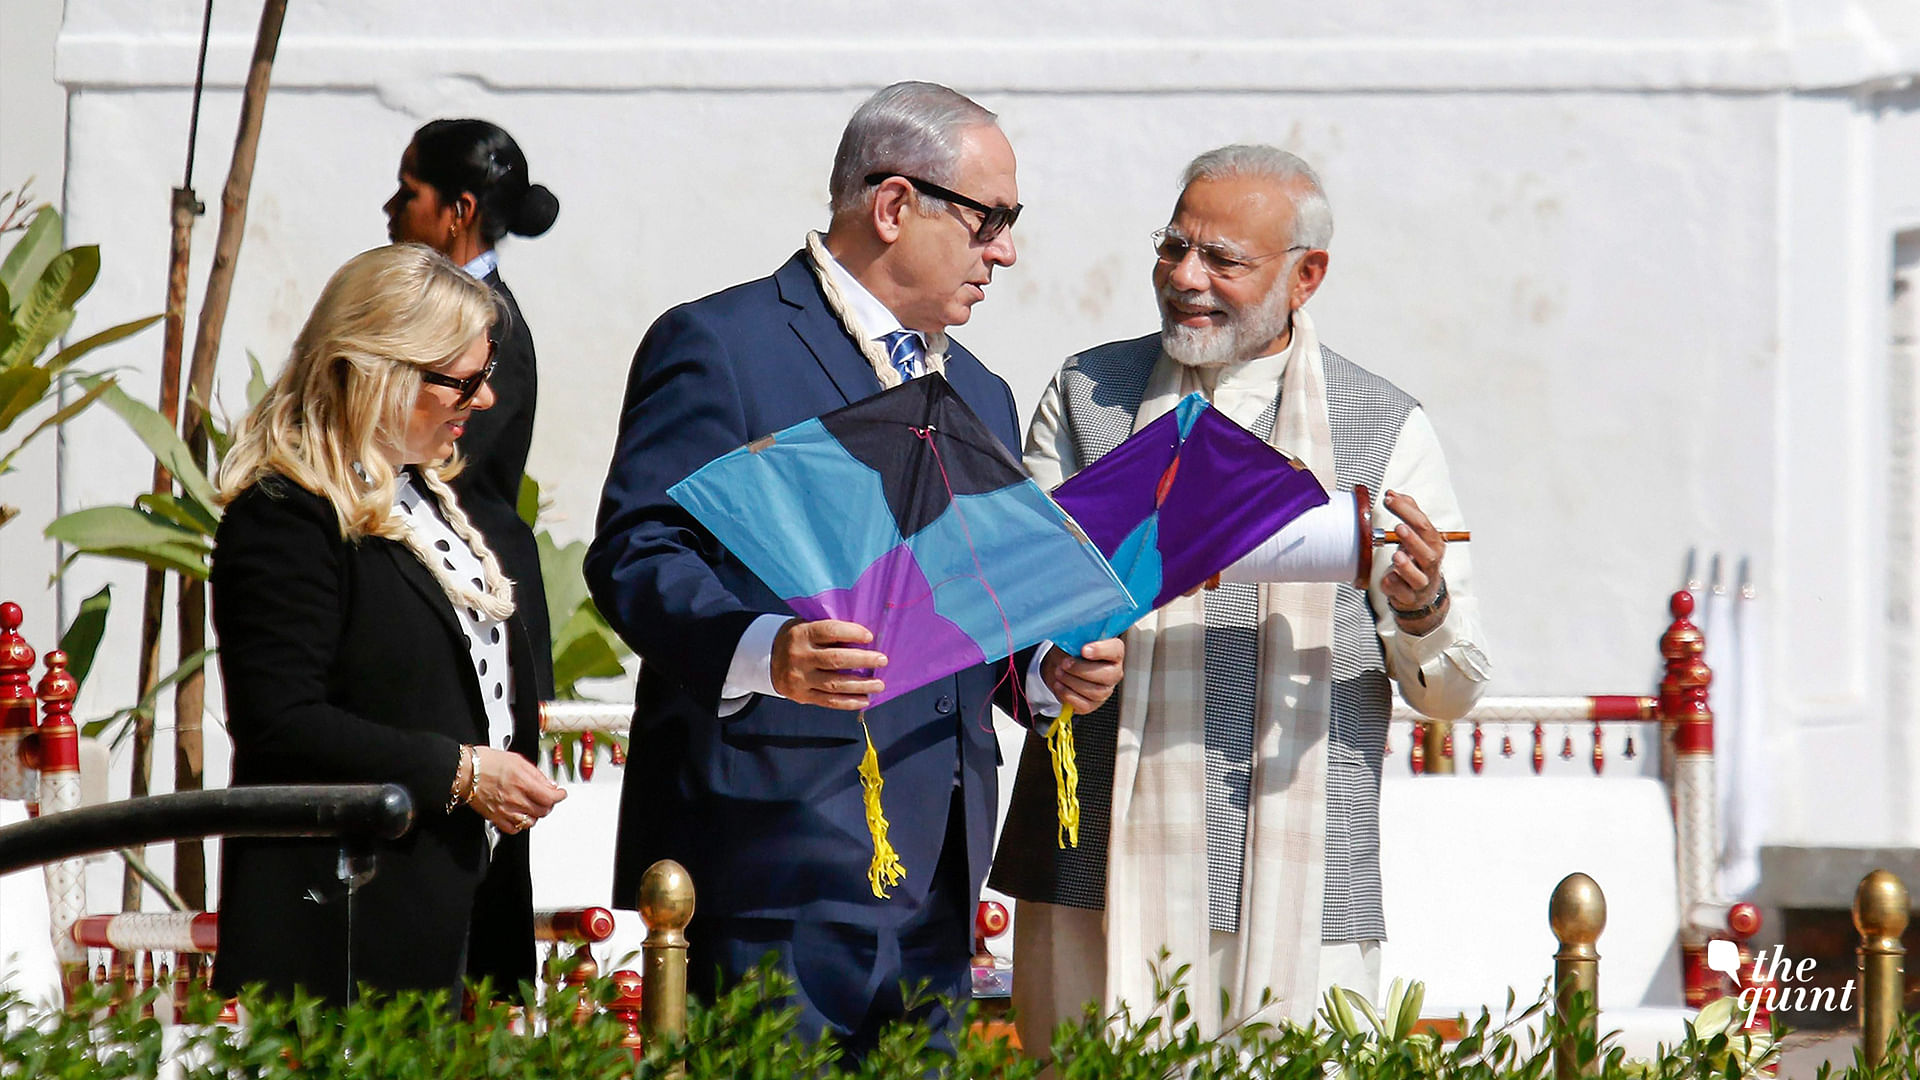 PM Modi, Israeli PM Benjamin Netanyahu and his wife Sara flying kites at Sabarmati Ashram.